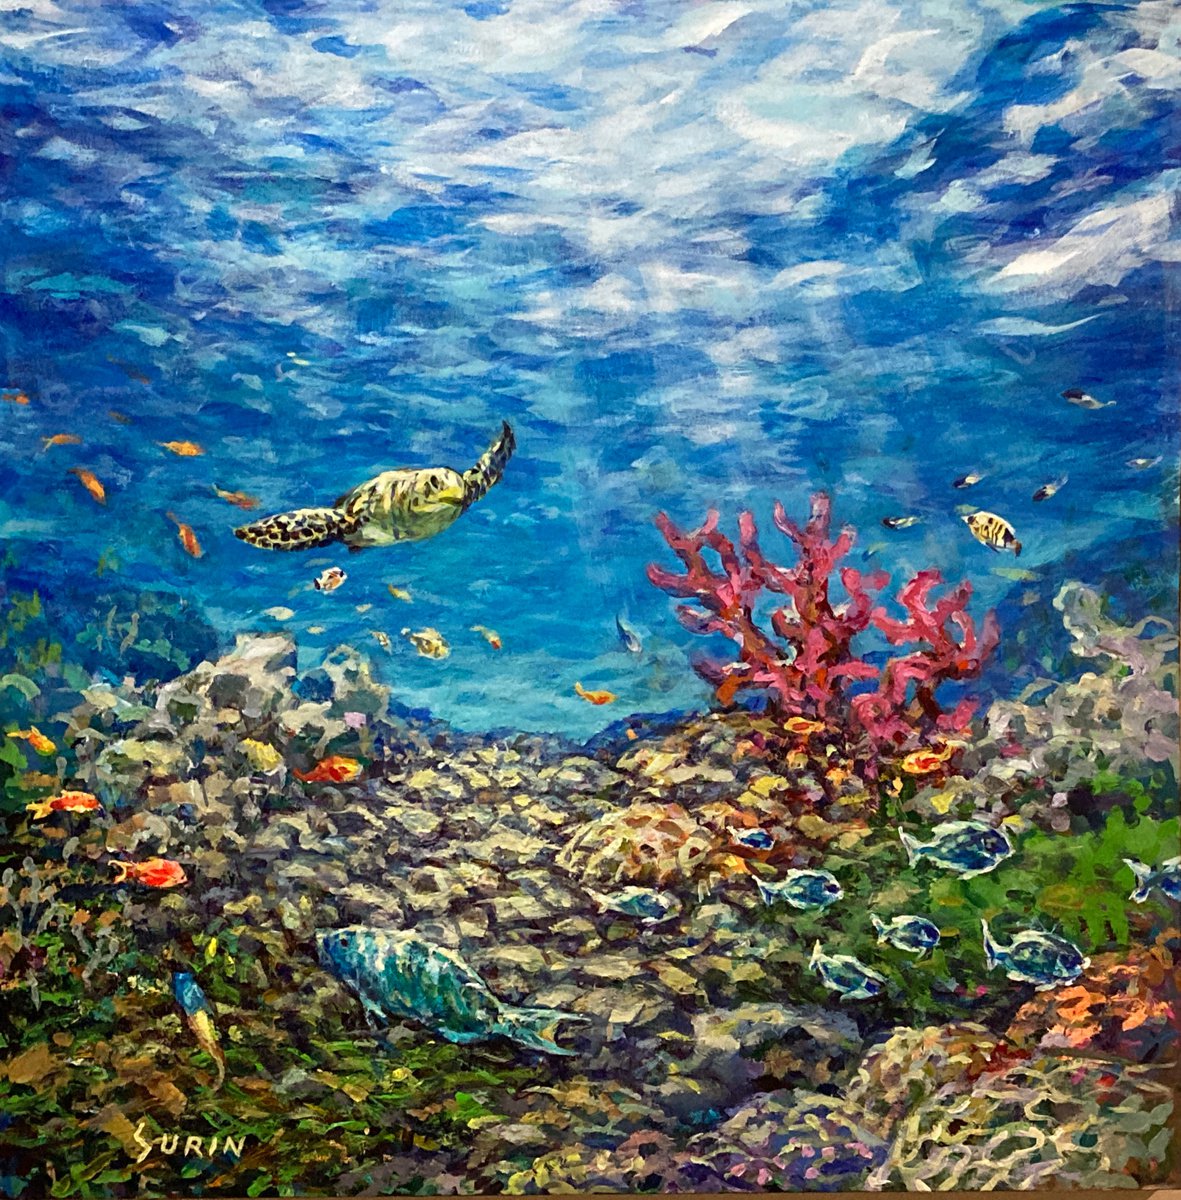 Sea Aquarium, Aquatic Life, Coral Reefs, Marine Life, Symphony of Color, marine painting by Surin Jung